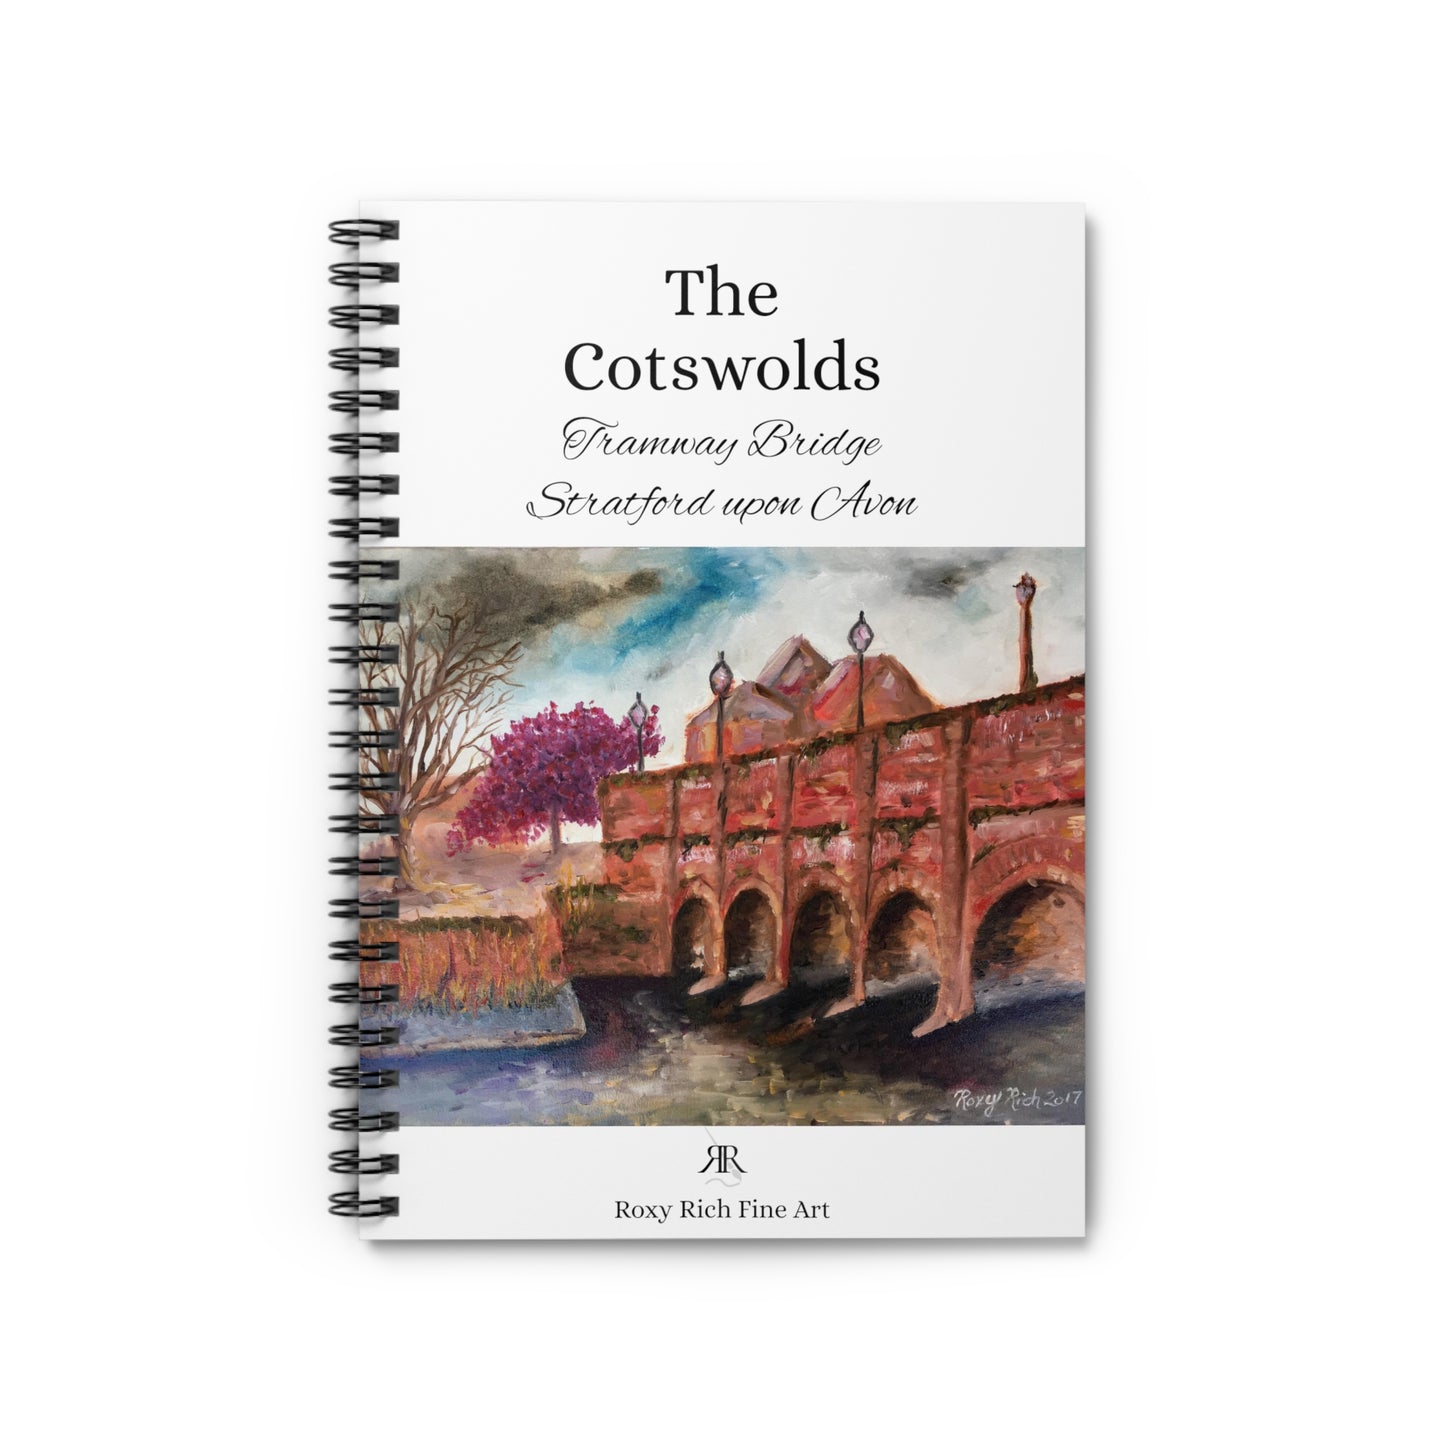 Tramway Bridge Stratford upon Avon "The Cotswolds" Spiral Notebook